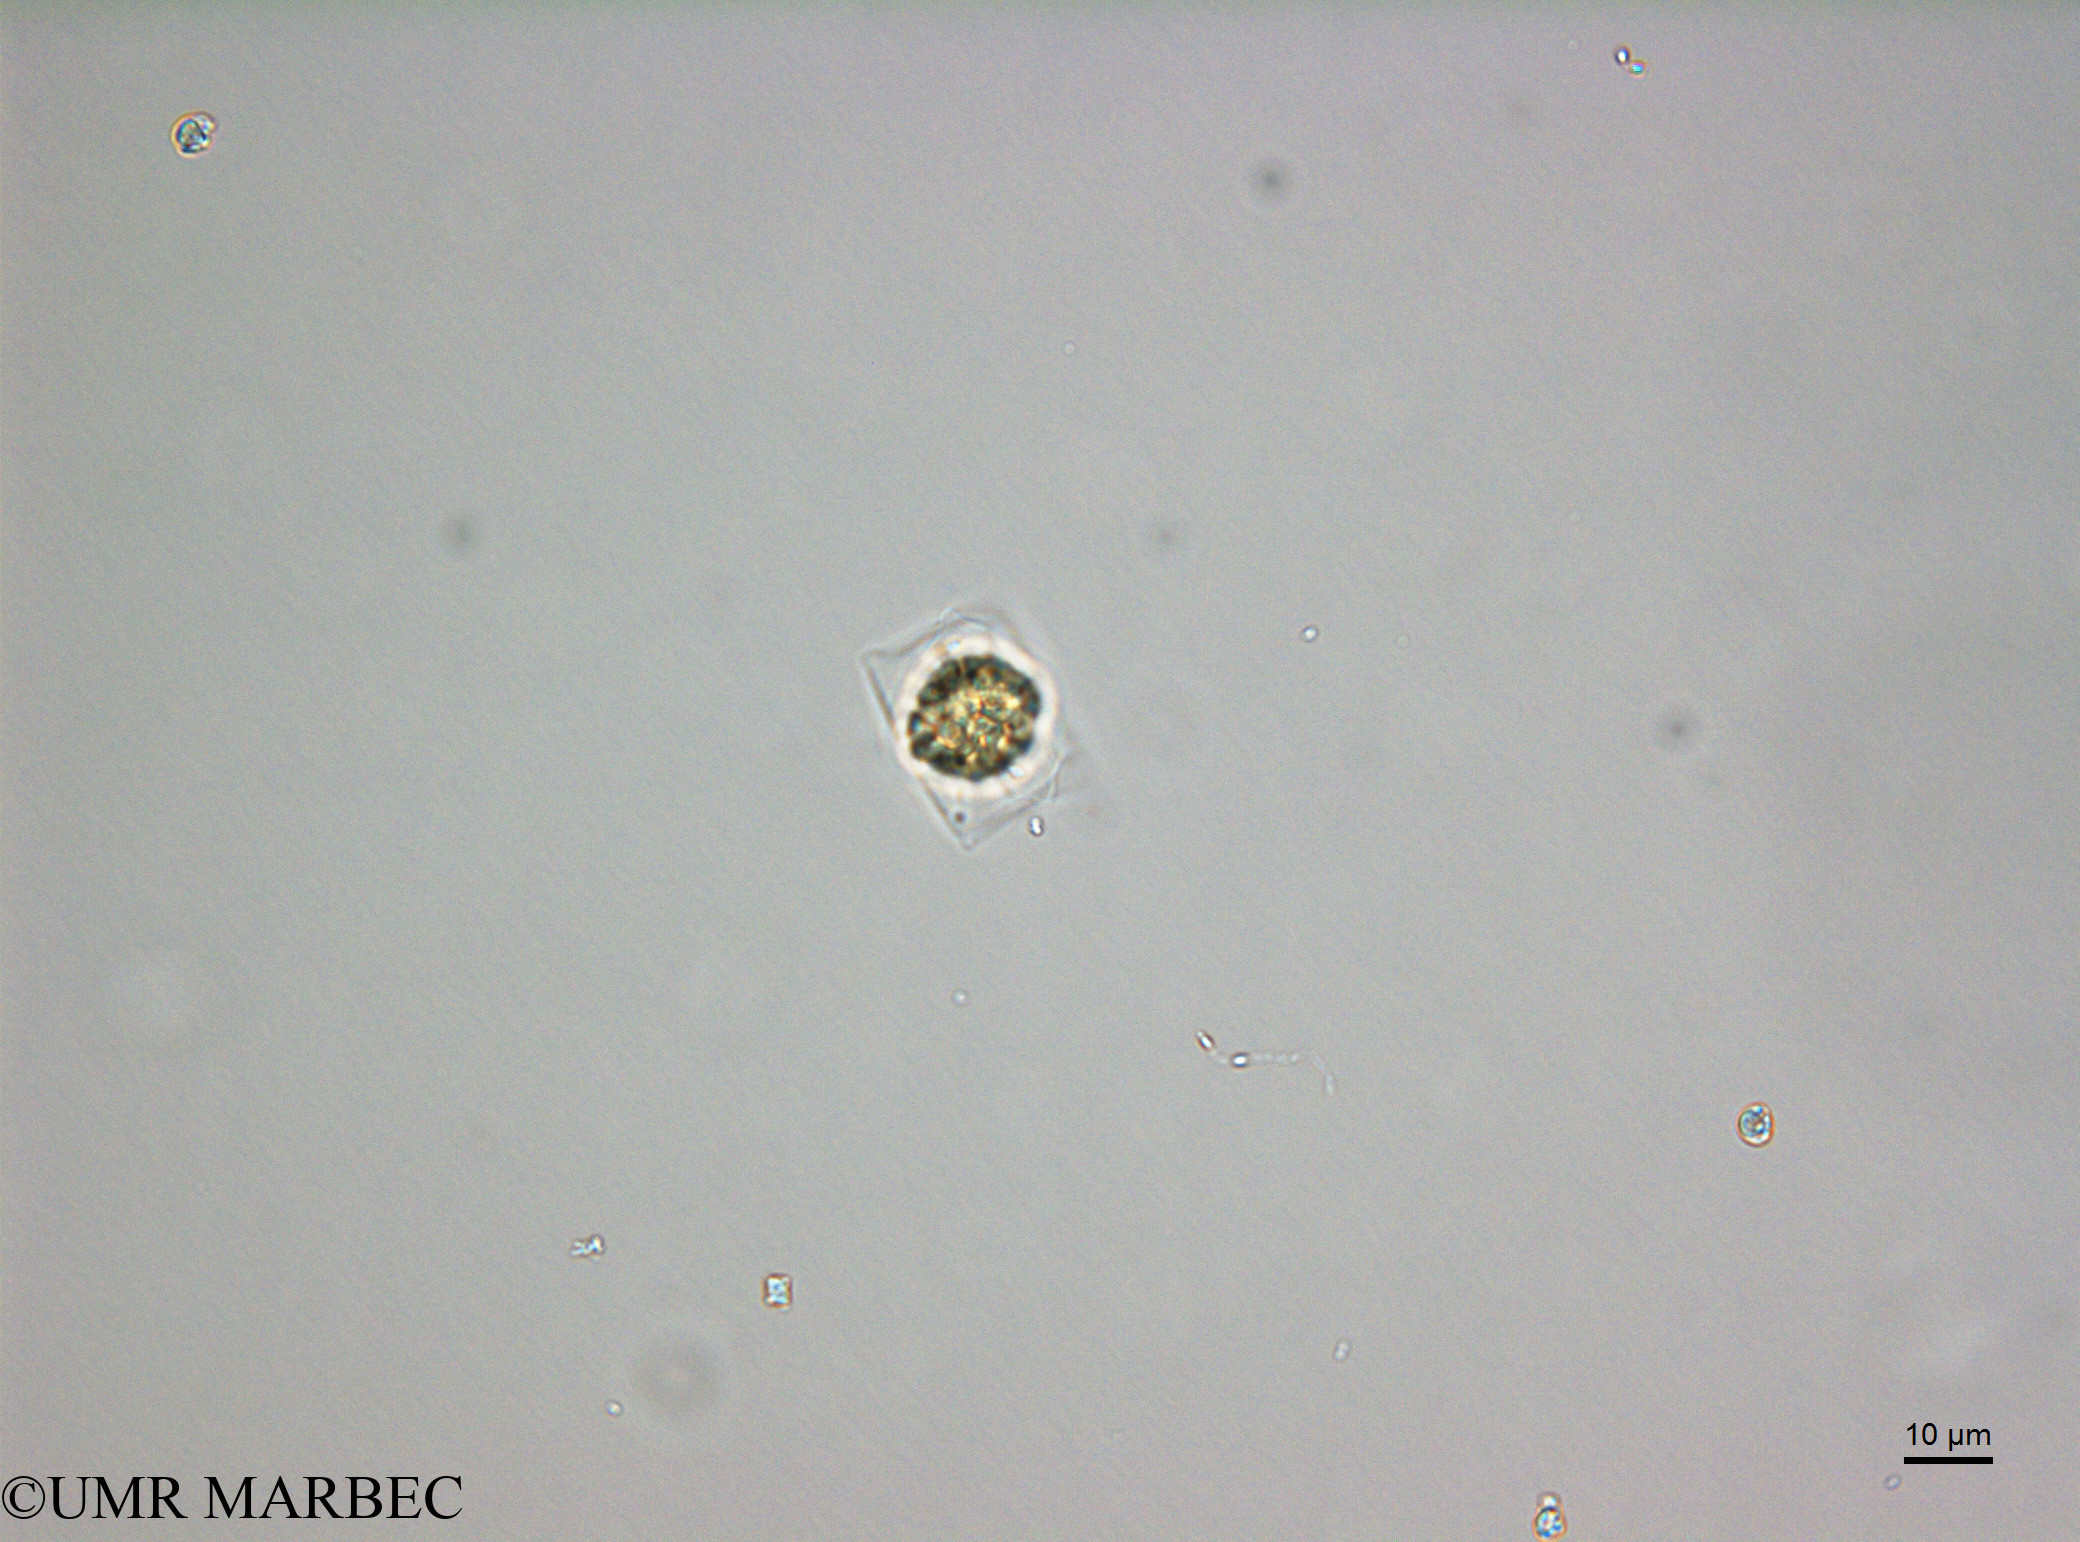 phyto/Scattered_Islands/juan_de_nova/COMMA2 November 2013/Cerataulina sp1 (D5_2_diatomee_ancien_melosira180717_001_ovl-4)(copy).jpg